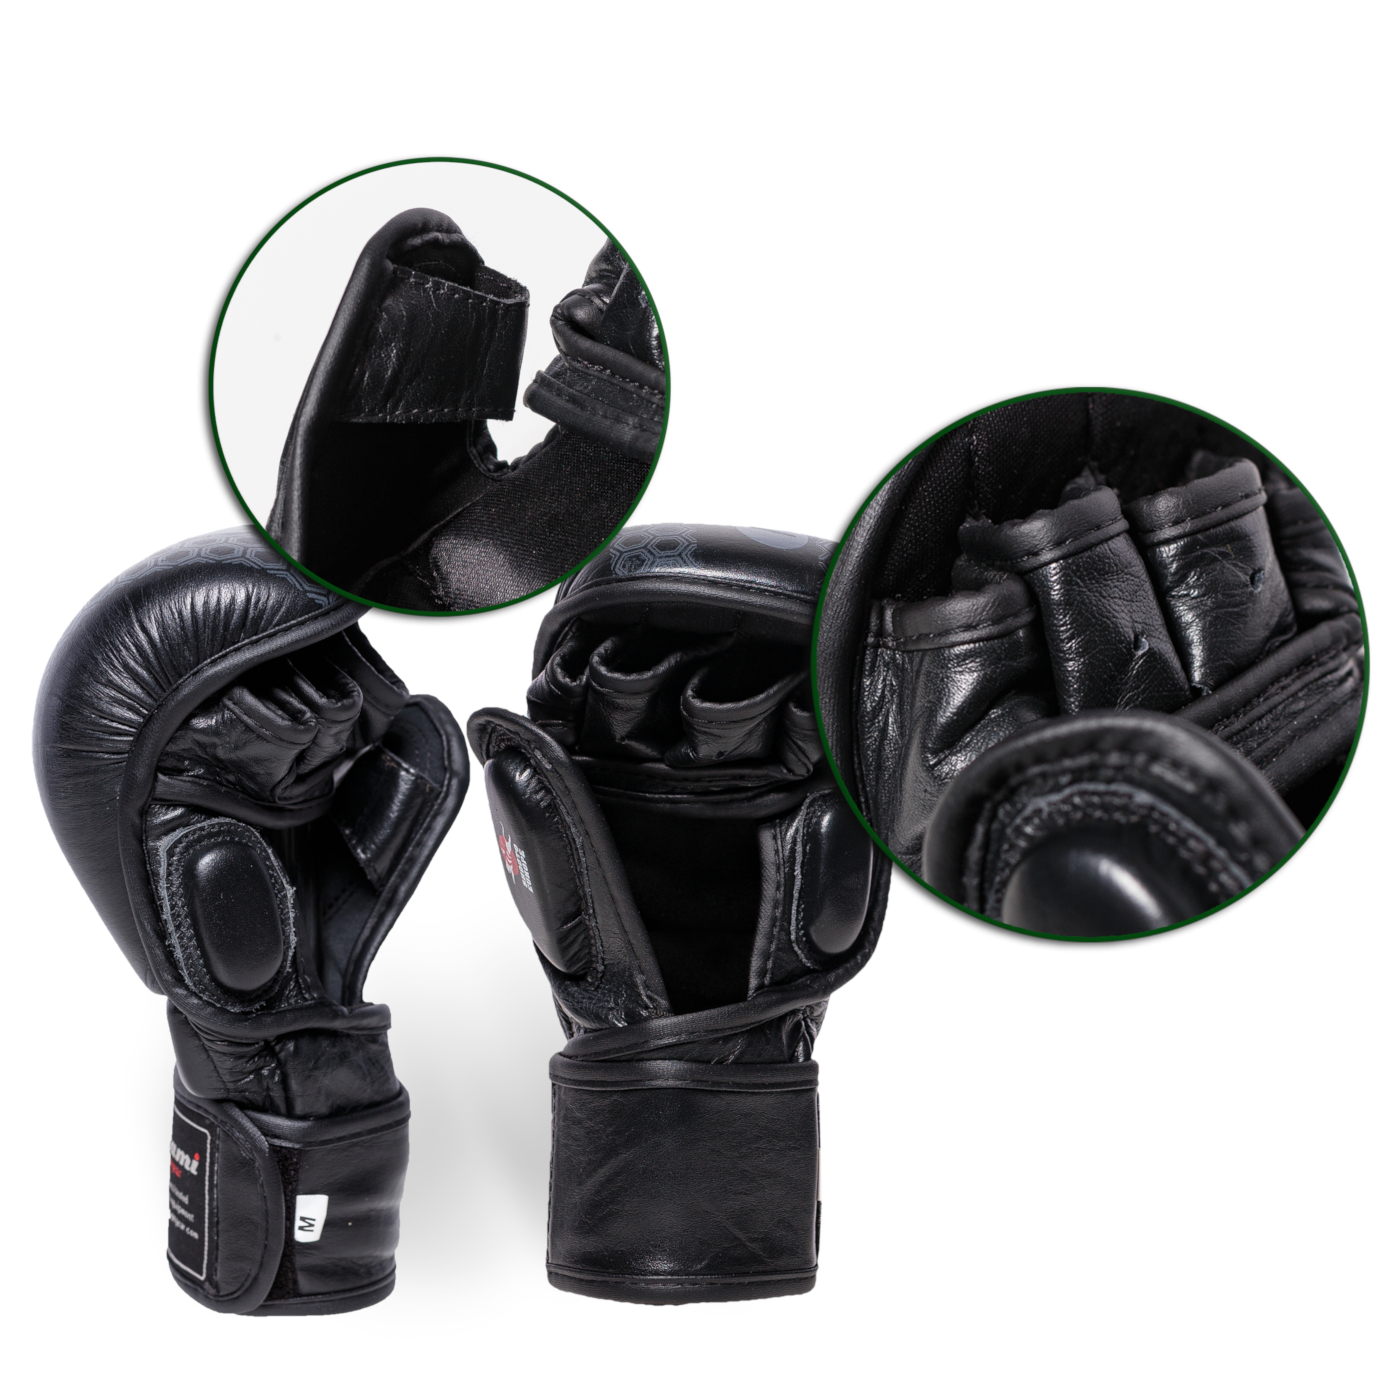 Okami Hi-Pro Sparring MMA Handschuhe Grappling Training UFC Fight glove S M L XL